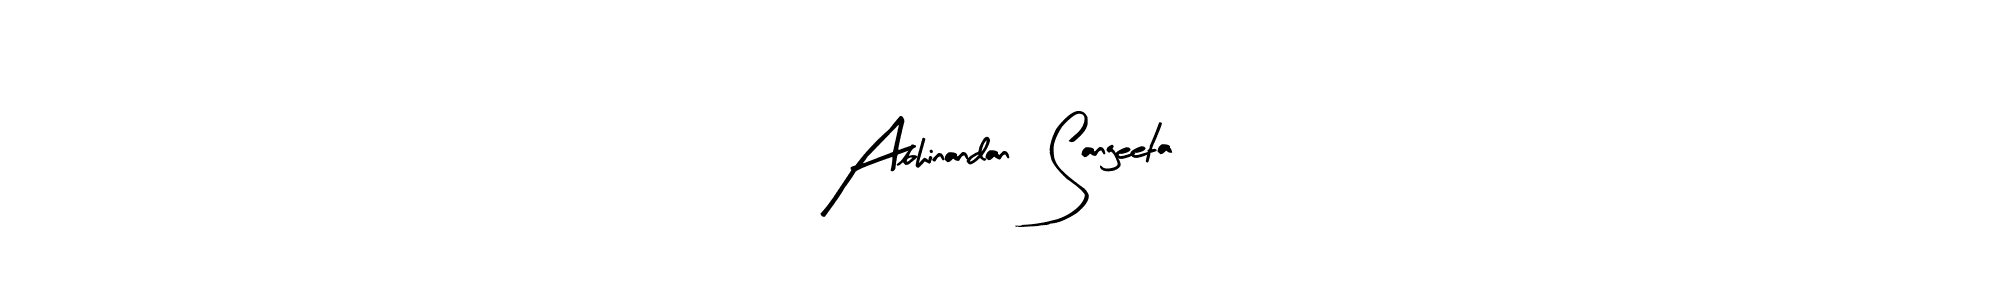 How to Draw Abhinandan  Sangeeta signature style? Arty Signature is a latest design signature styles for name Abhinandan  Sangeeta. Abhinandan  Sangeeta signature style 8 images and pictures png